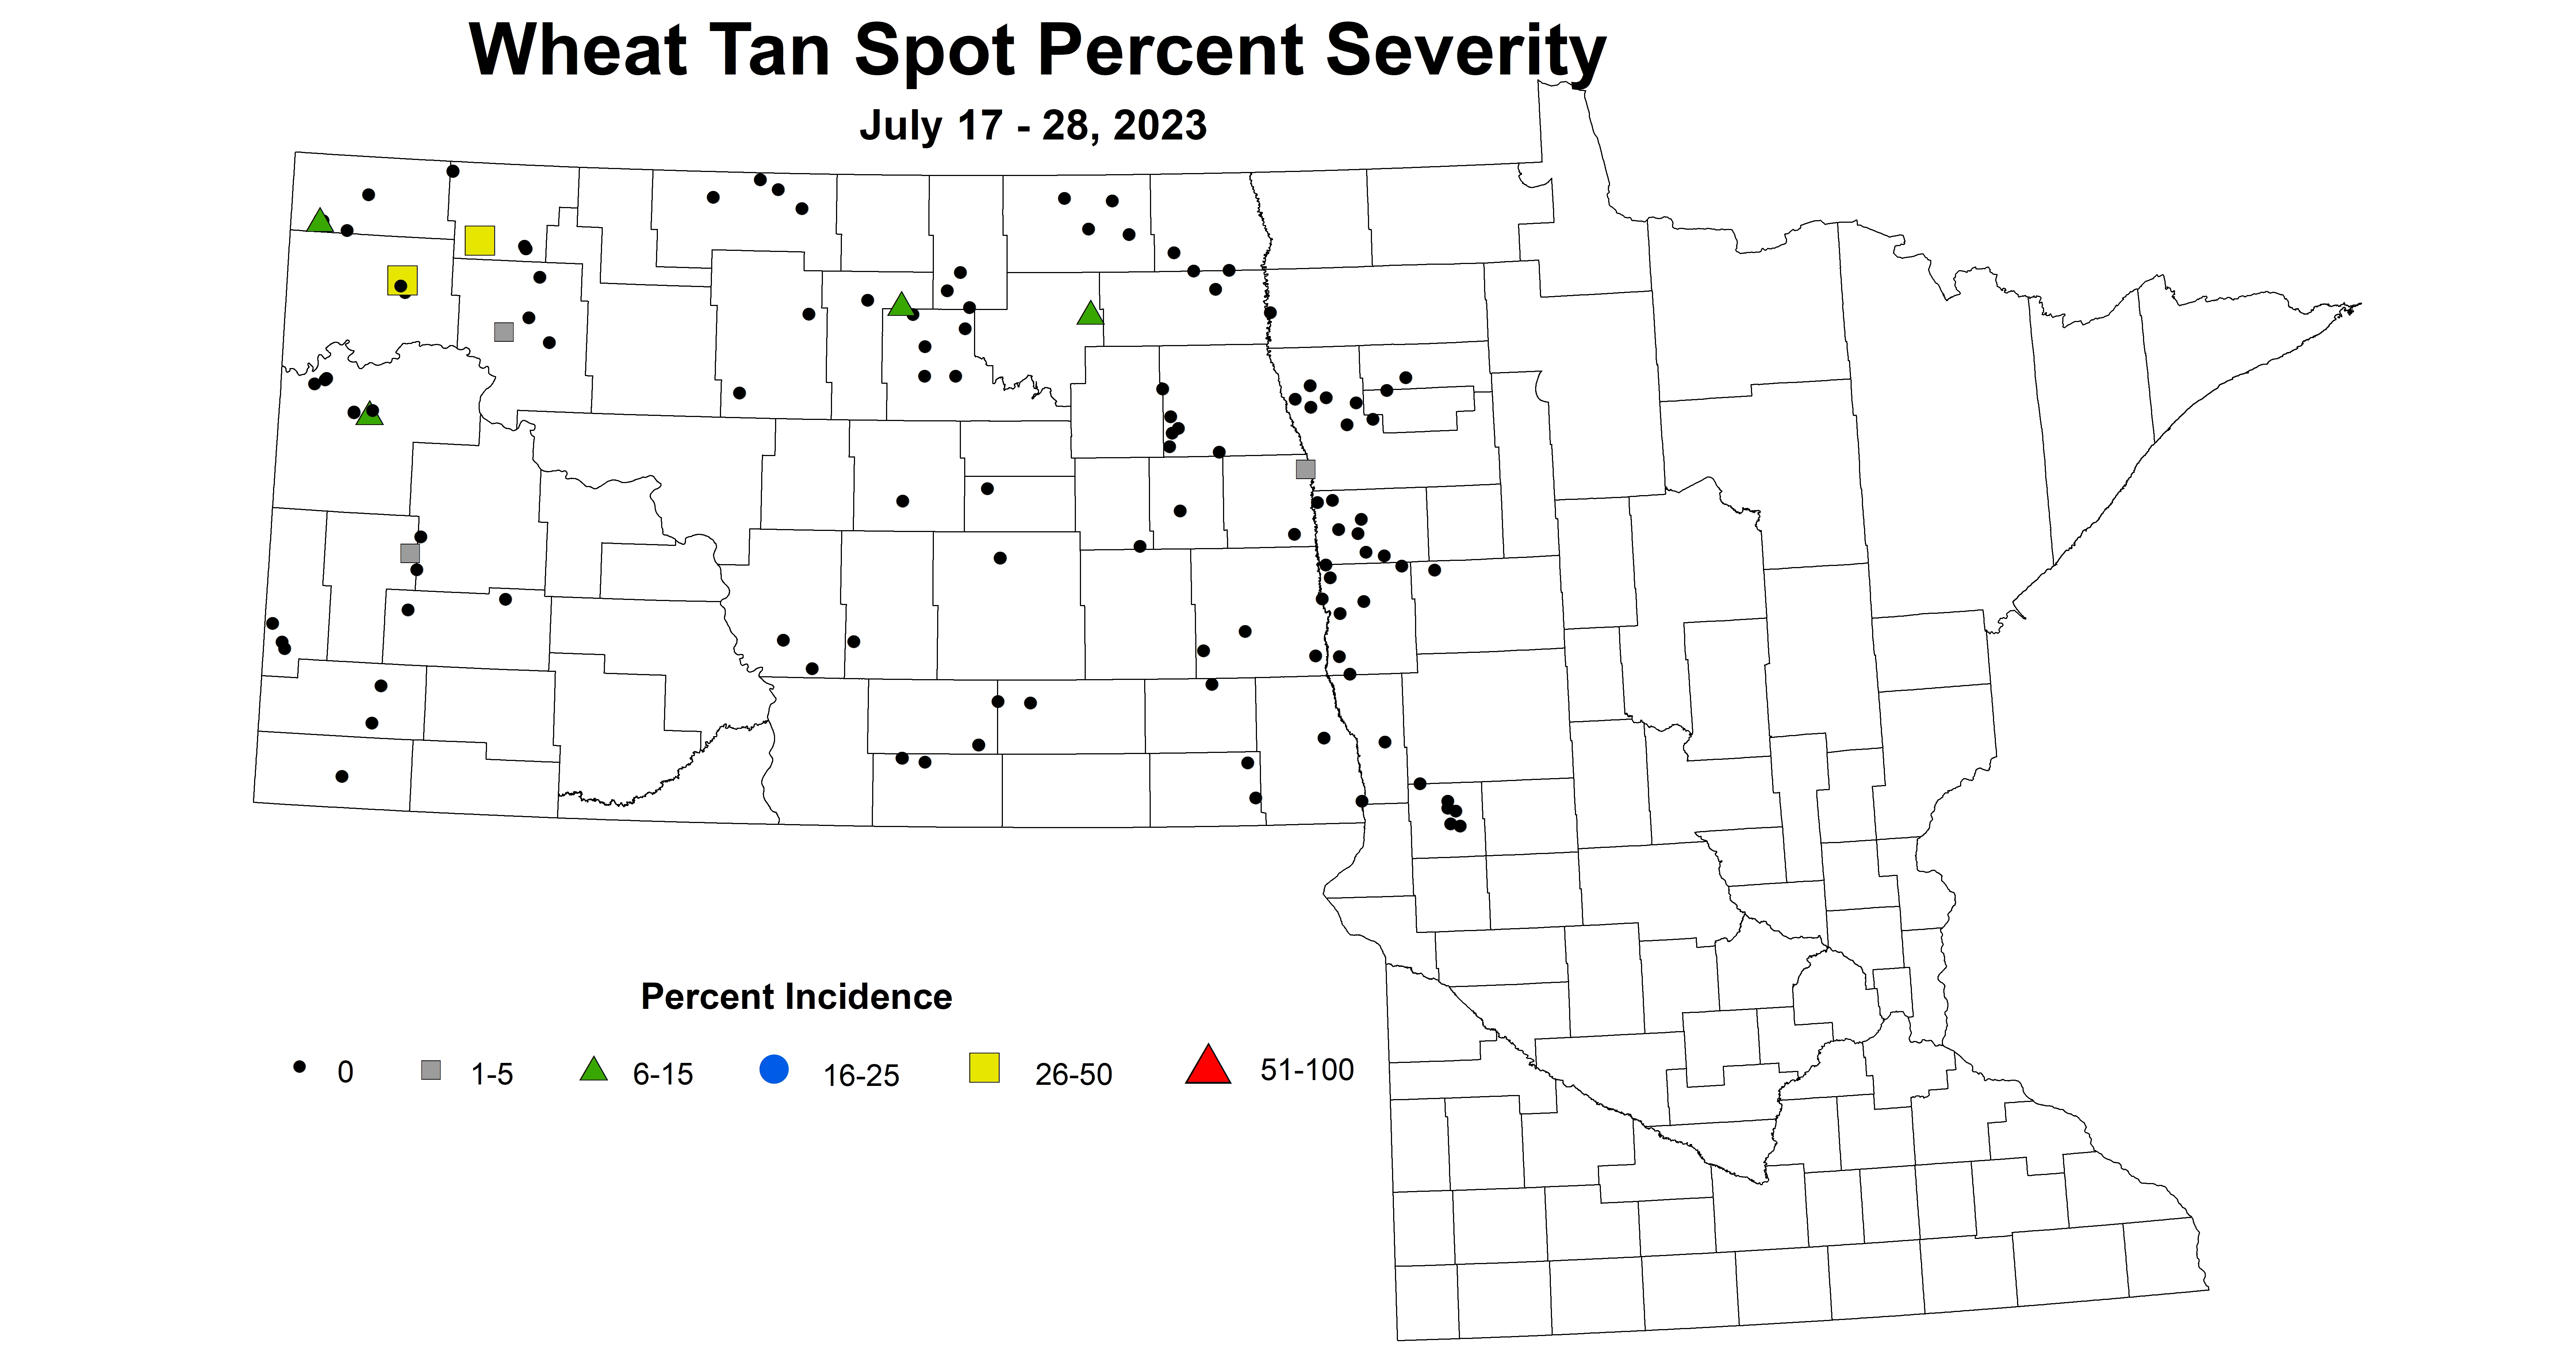 wheat tan spot severity July 17-28 2023